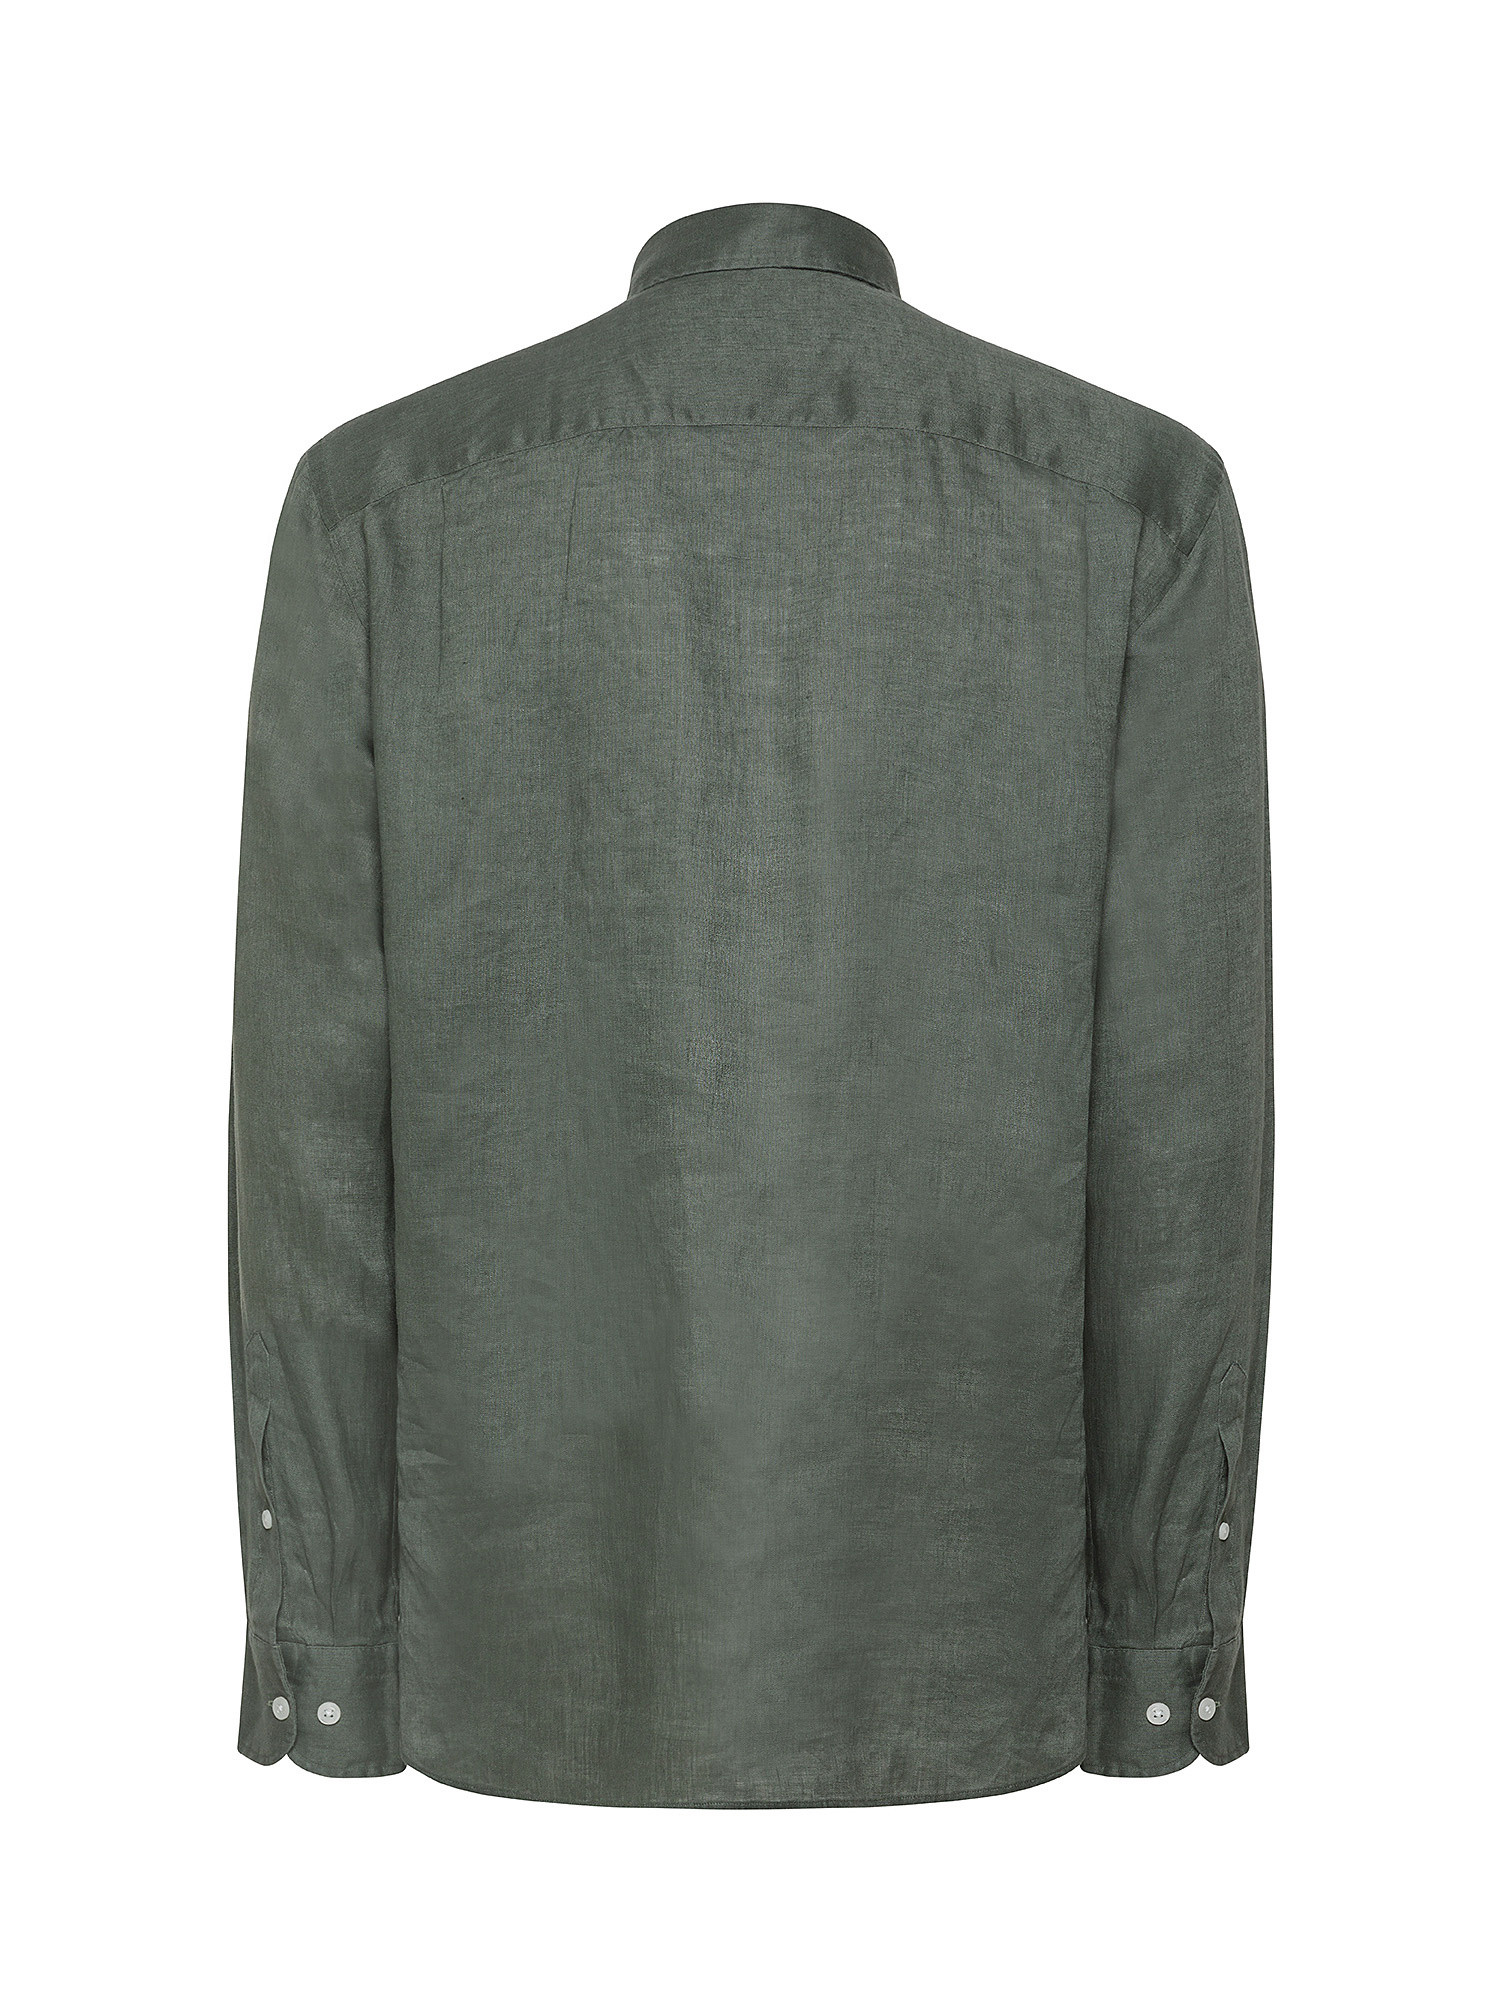 Luca D'Altieri - Regular fit shirt in pure linen, Sage Green, large image number 1